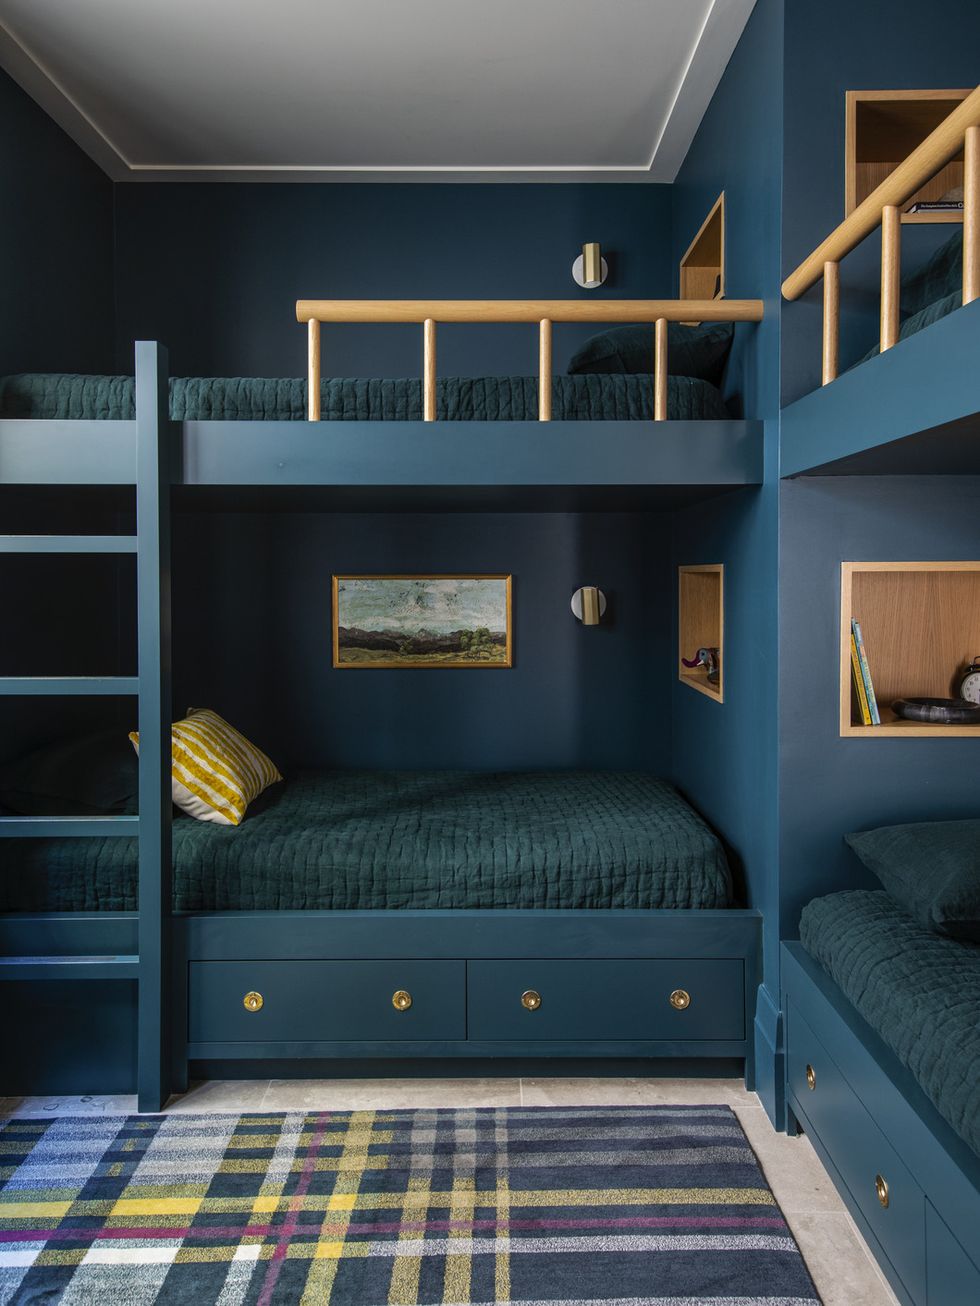 8 Ways To Simplify & Organize Your Master Bedroom - Organization